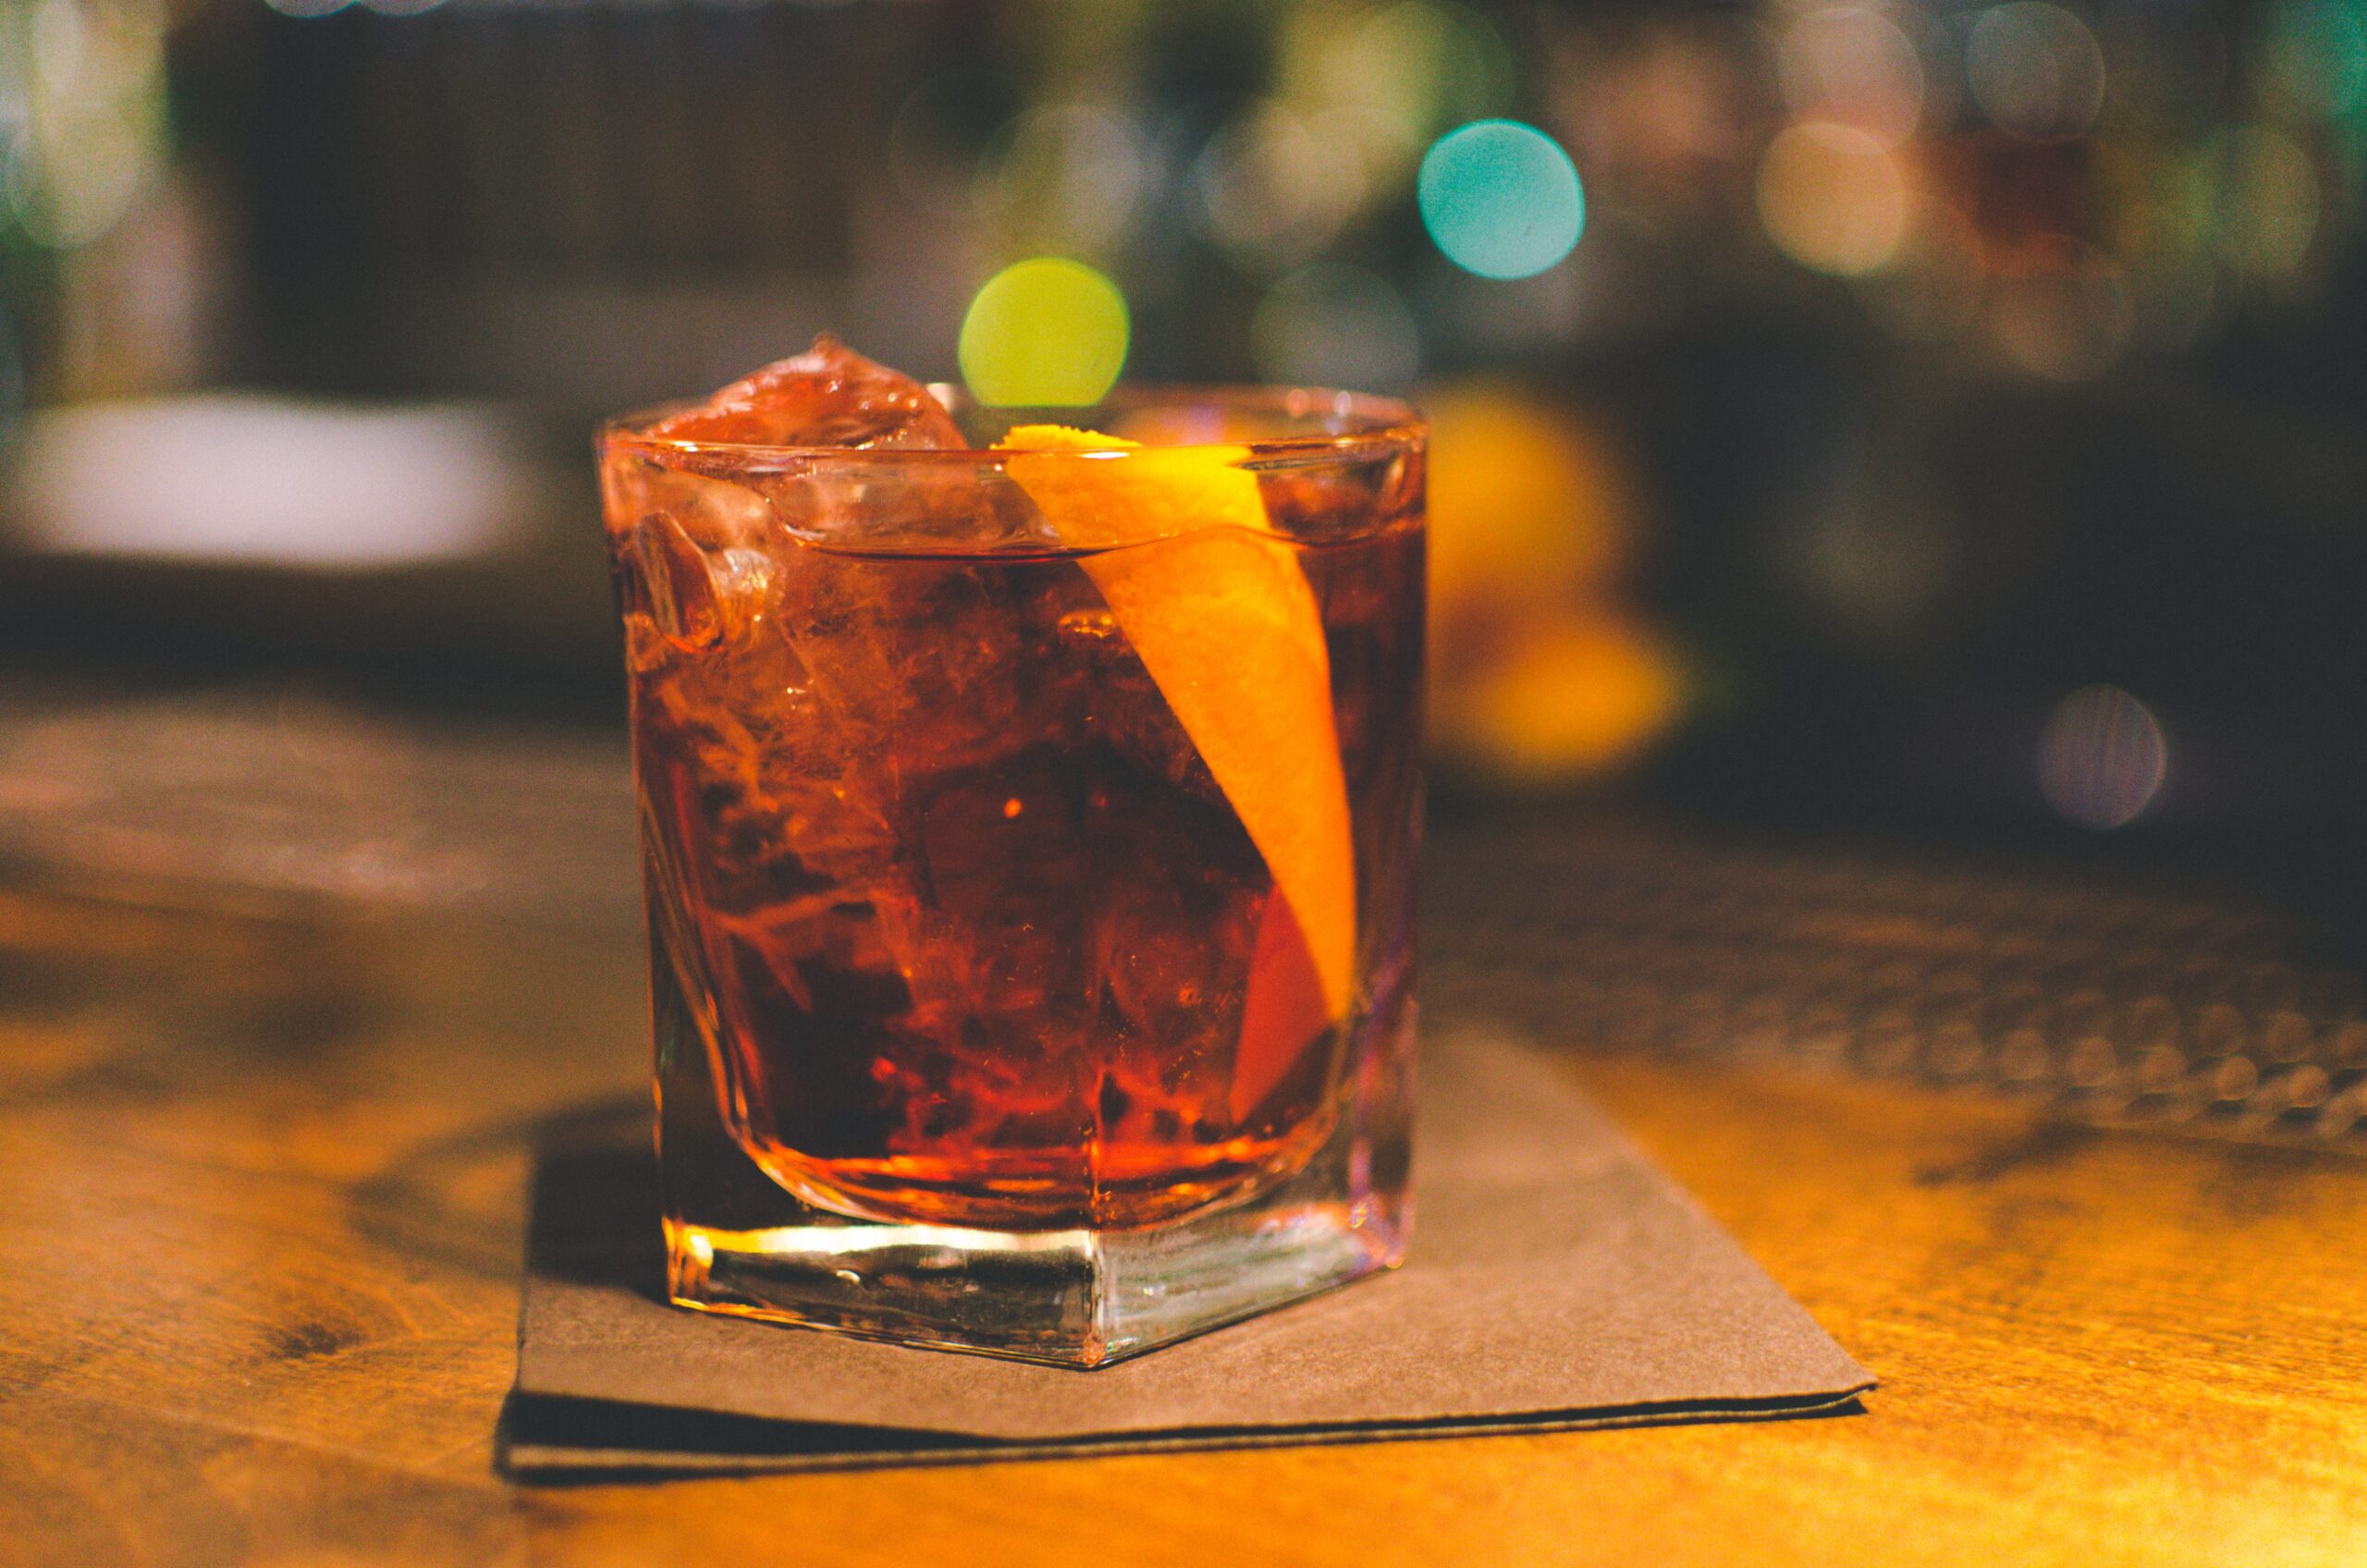 A cocktail on a bar with an orange peel garnish.